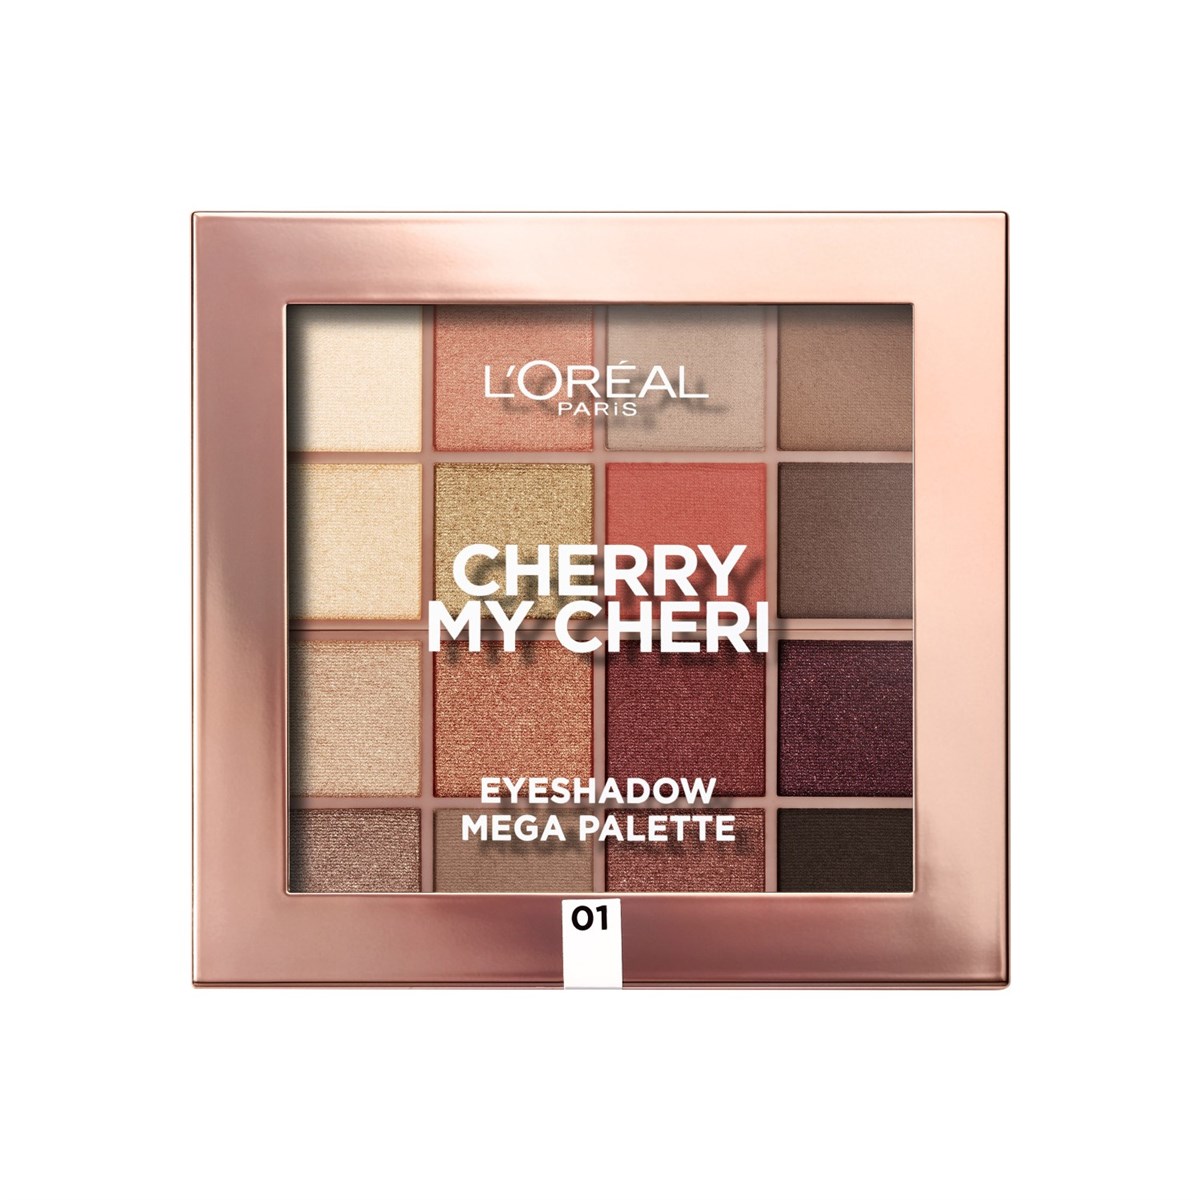 Loreal Paris Cherry My Cheri Eyeshadow Mega Palette Far Paleti 01 | Cossta  Cosmetic Station